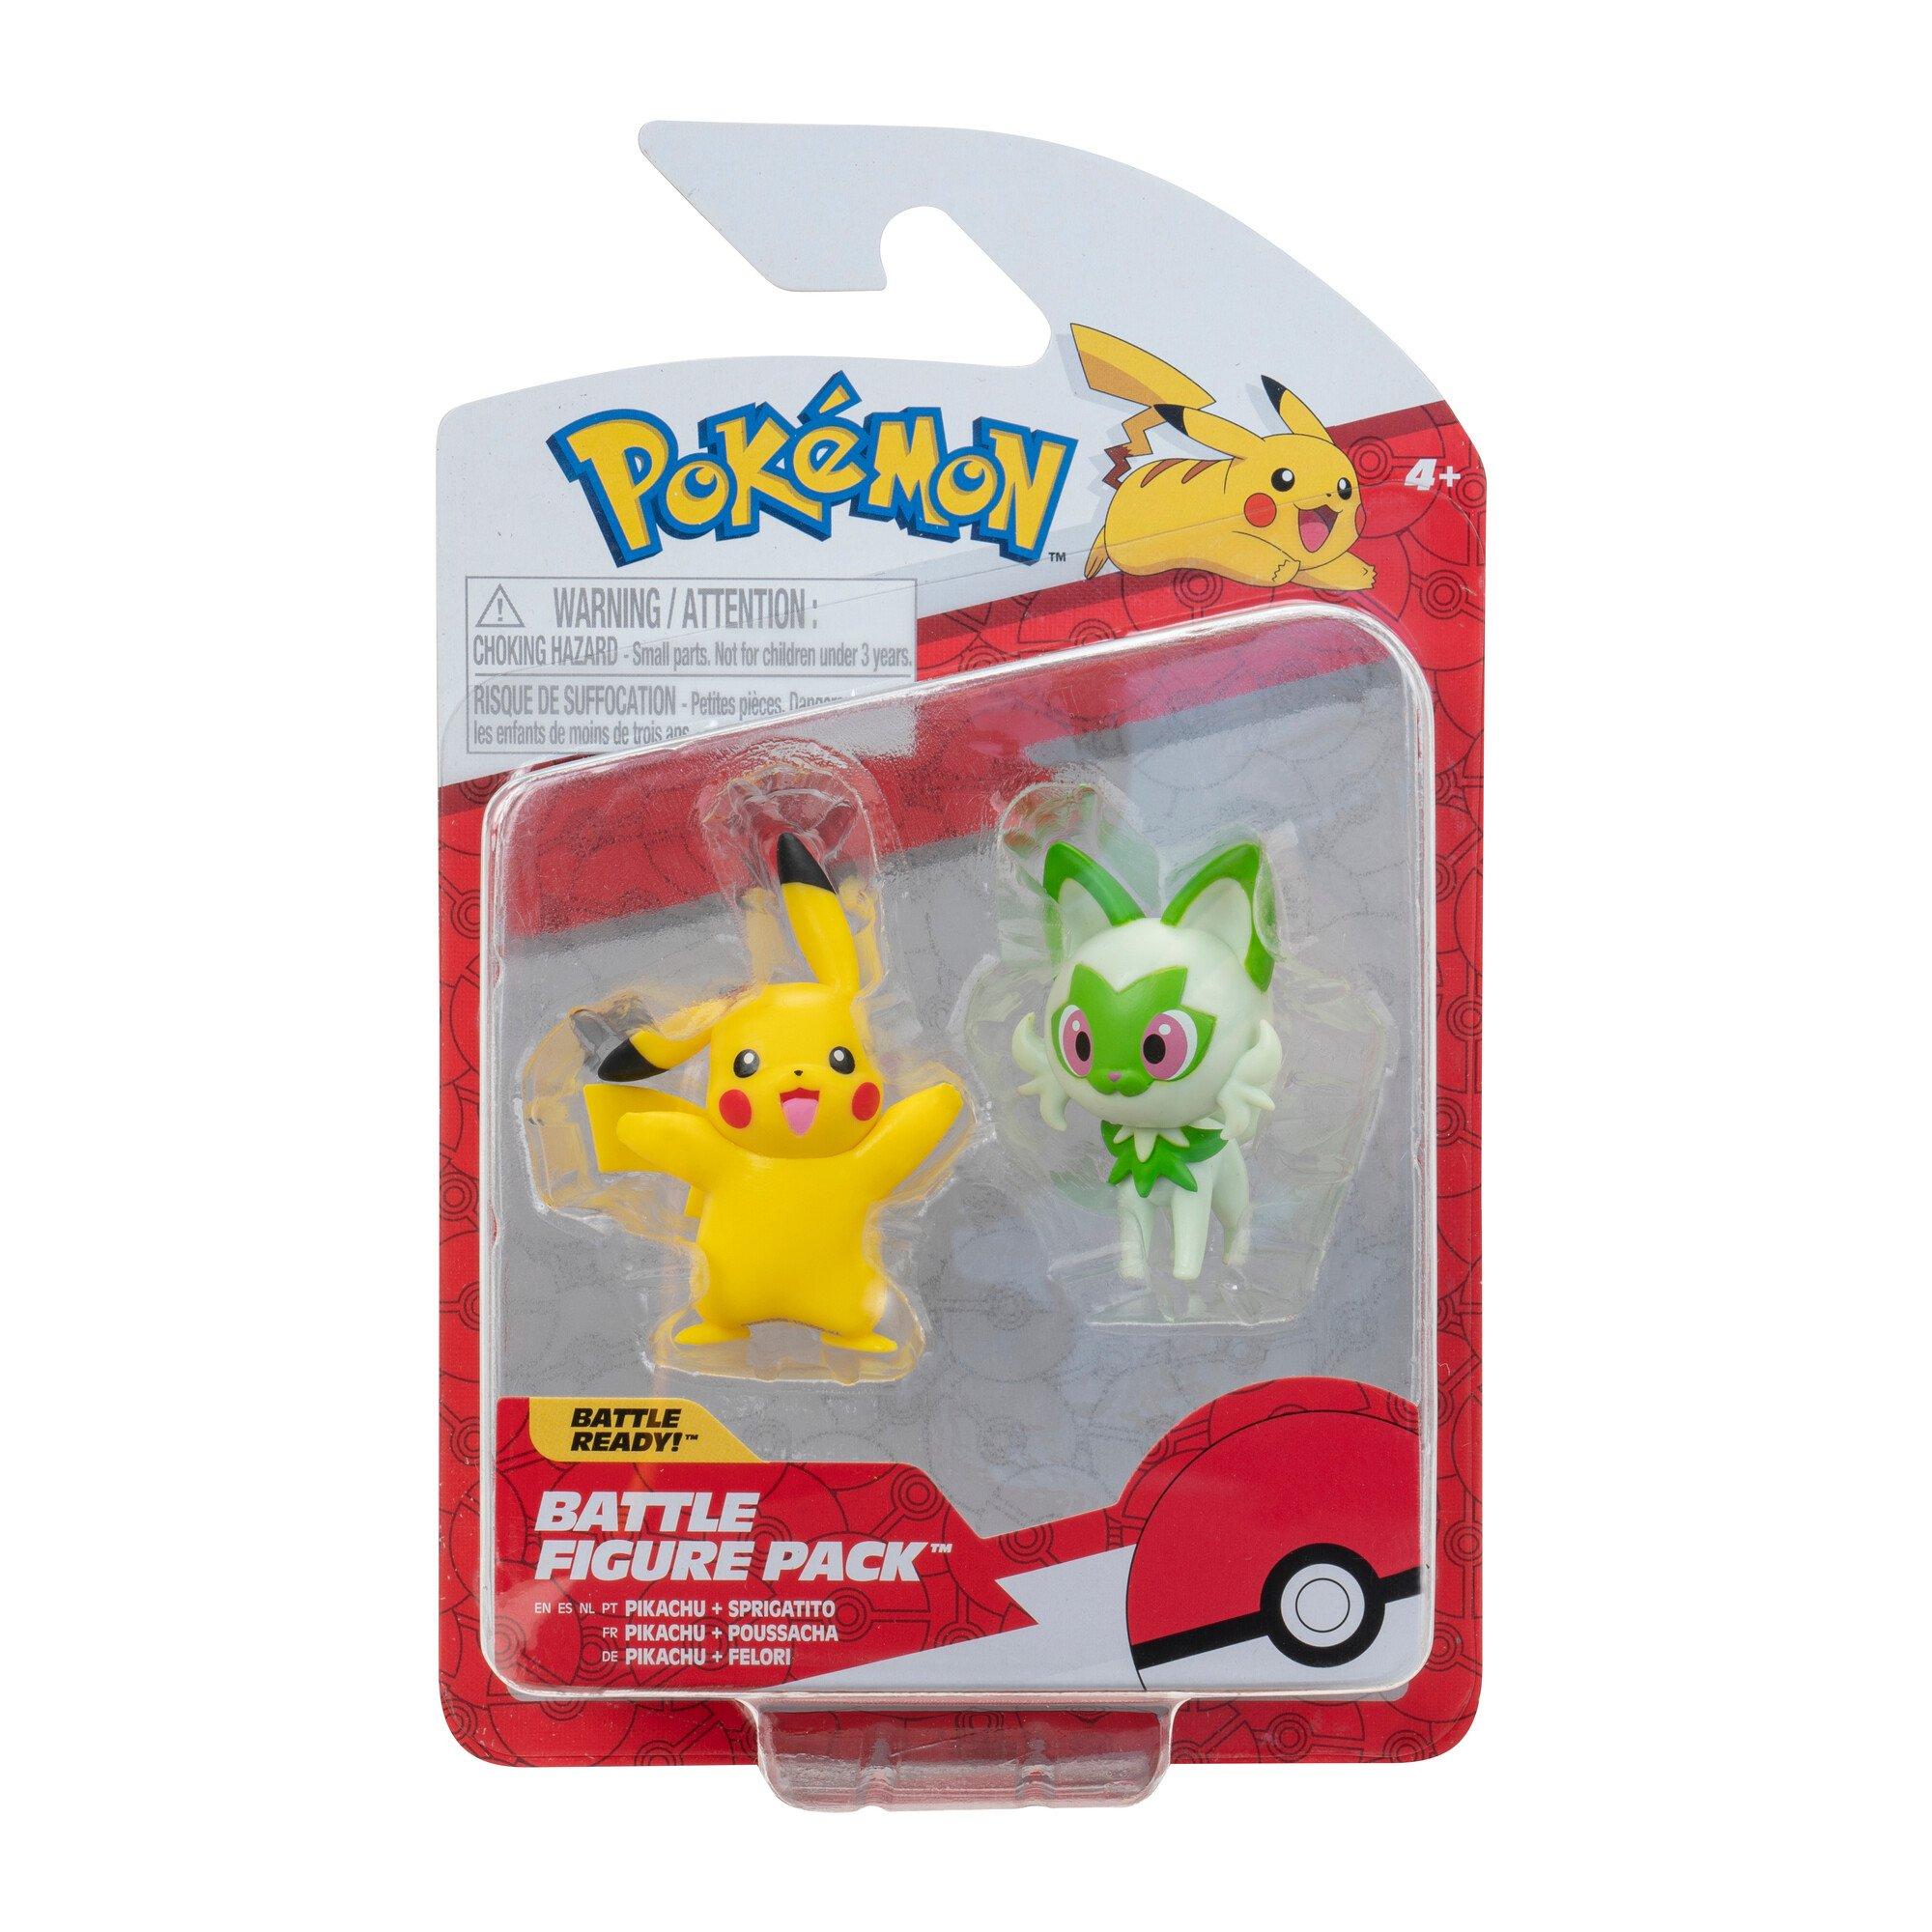 Pokémon My Partner Pikachu Electronic Interactive Toy Figure New